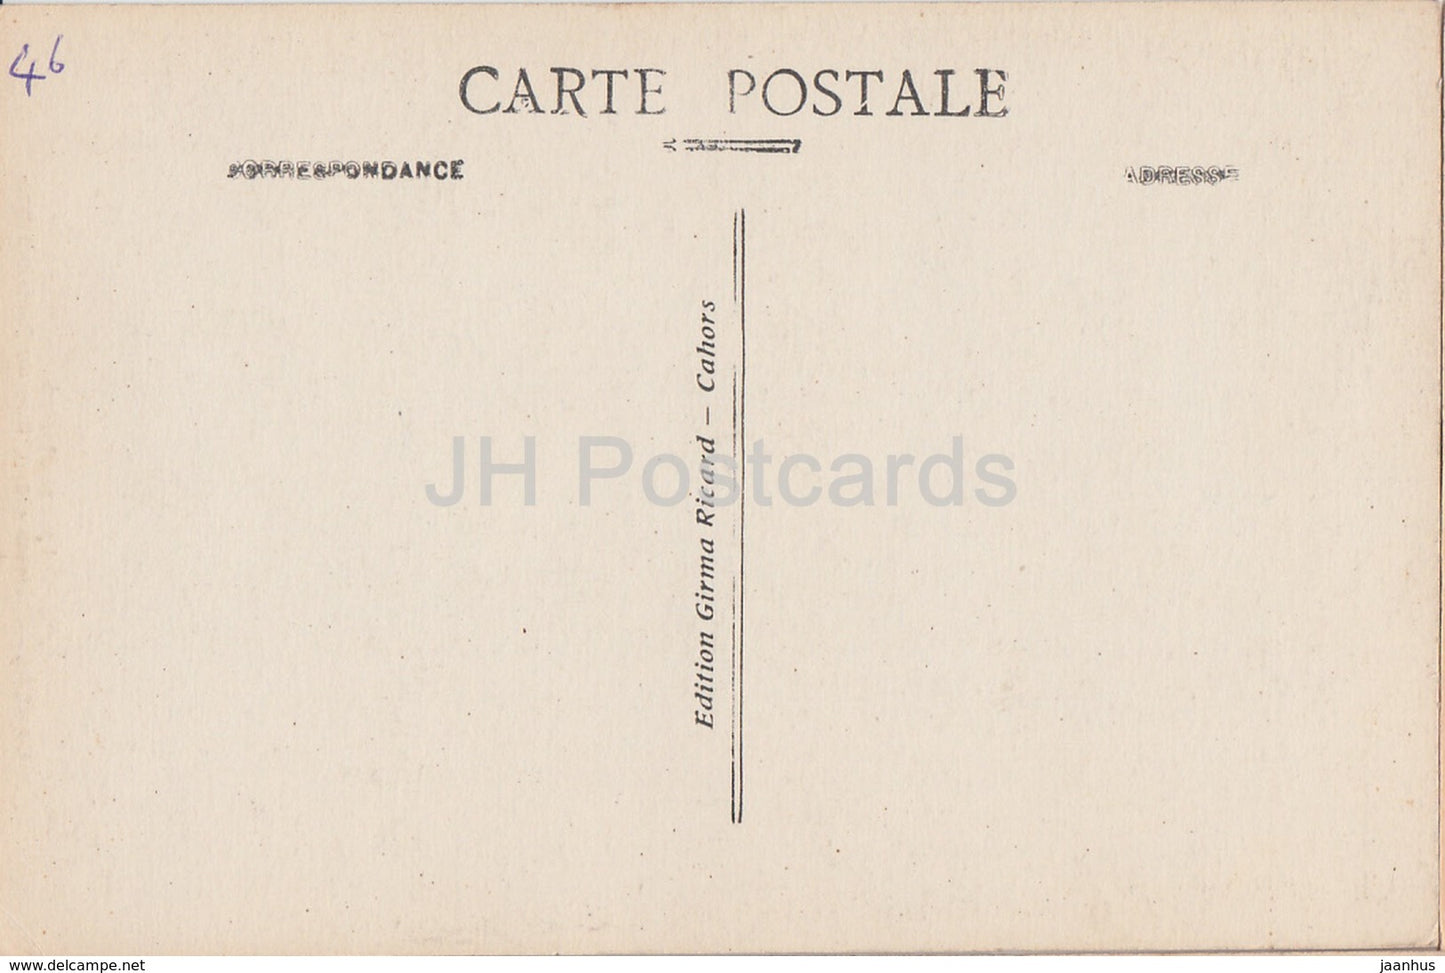 Cahors - Chateau Alban - Rue du Portail Alban - castle - old postcard - France - unused